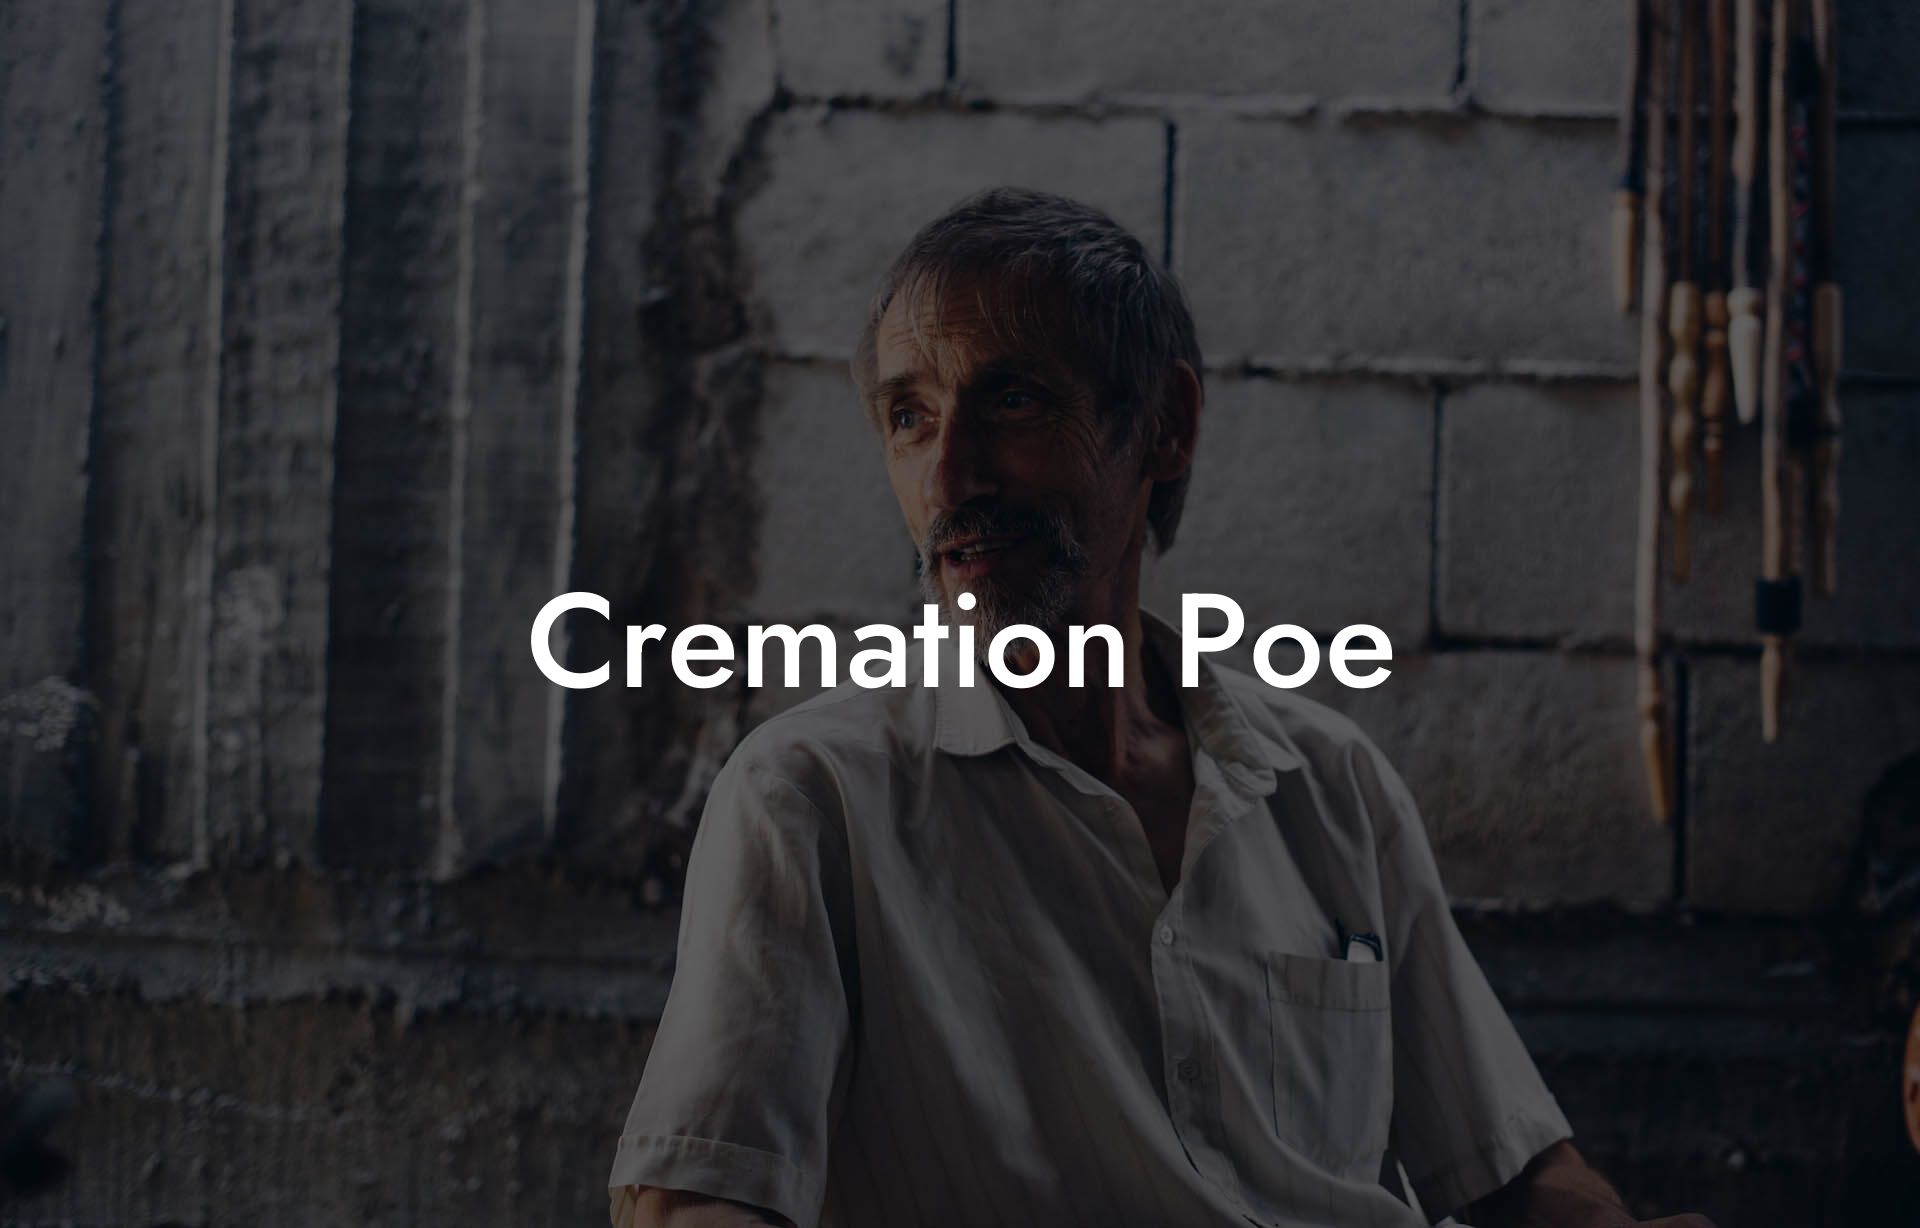 Cremation Poe